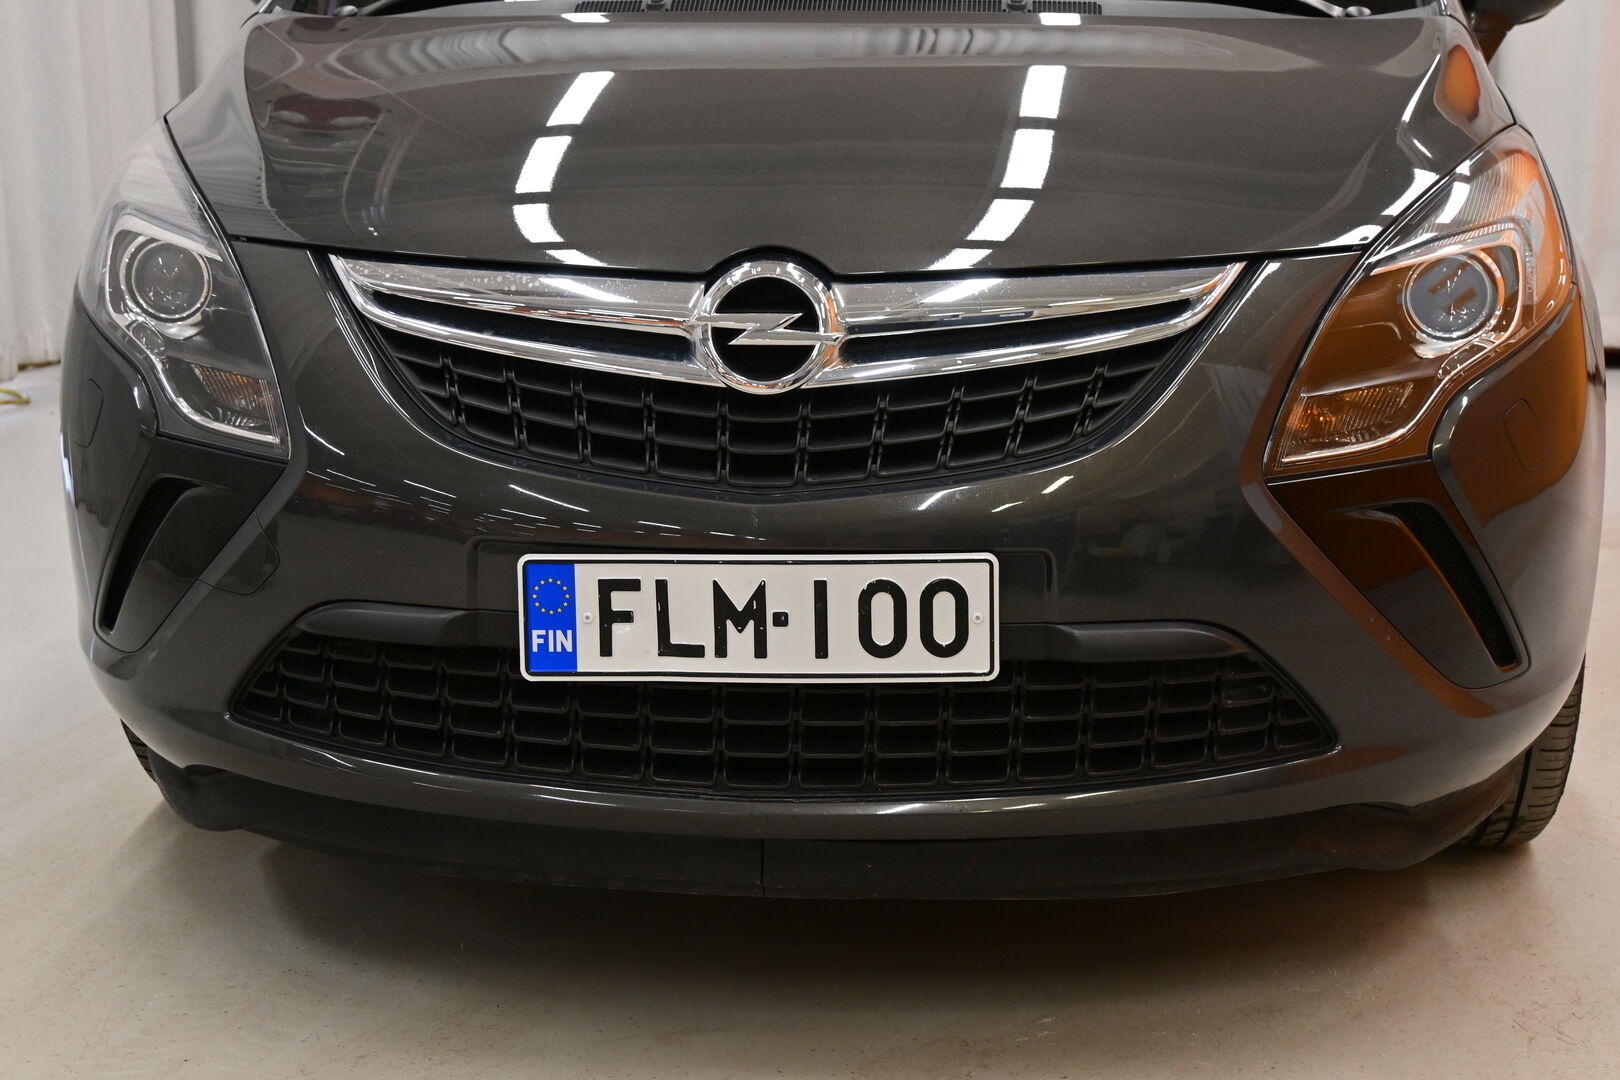 Harmaa Tila-auto, Opel Zafira Tourer – FLM-100